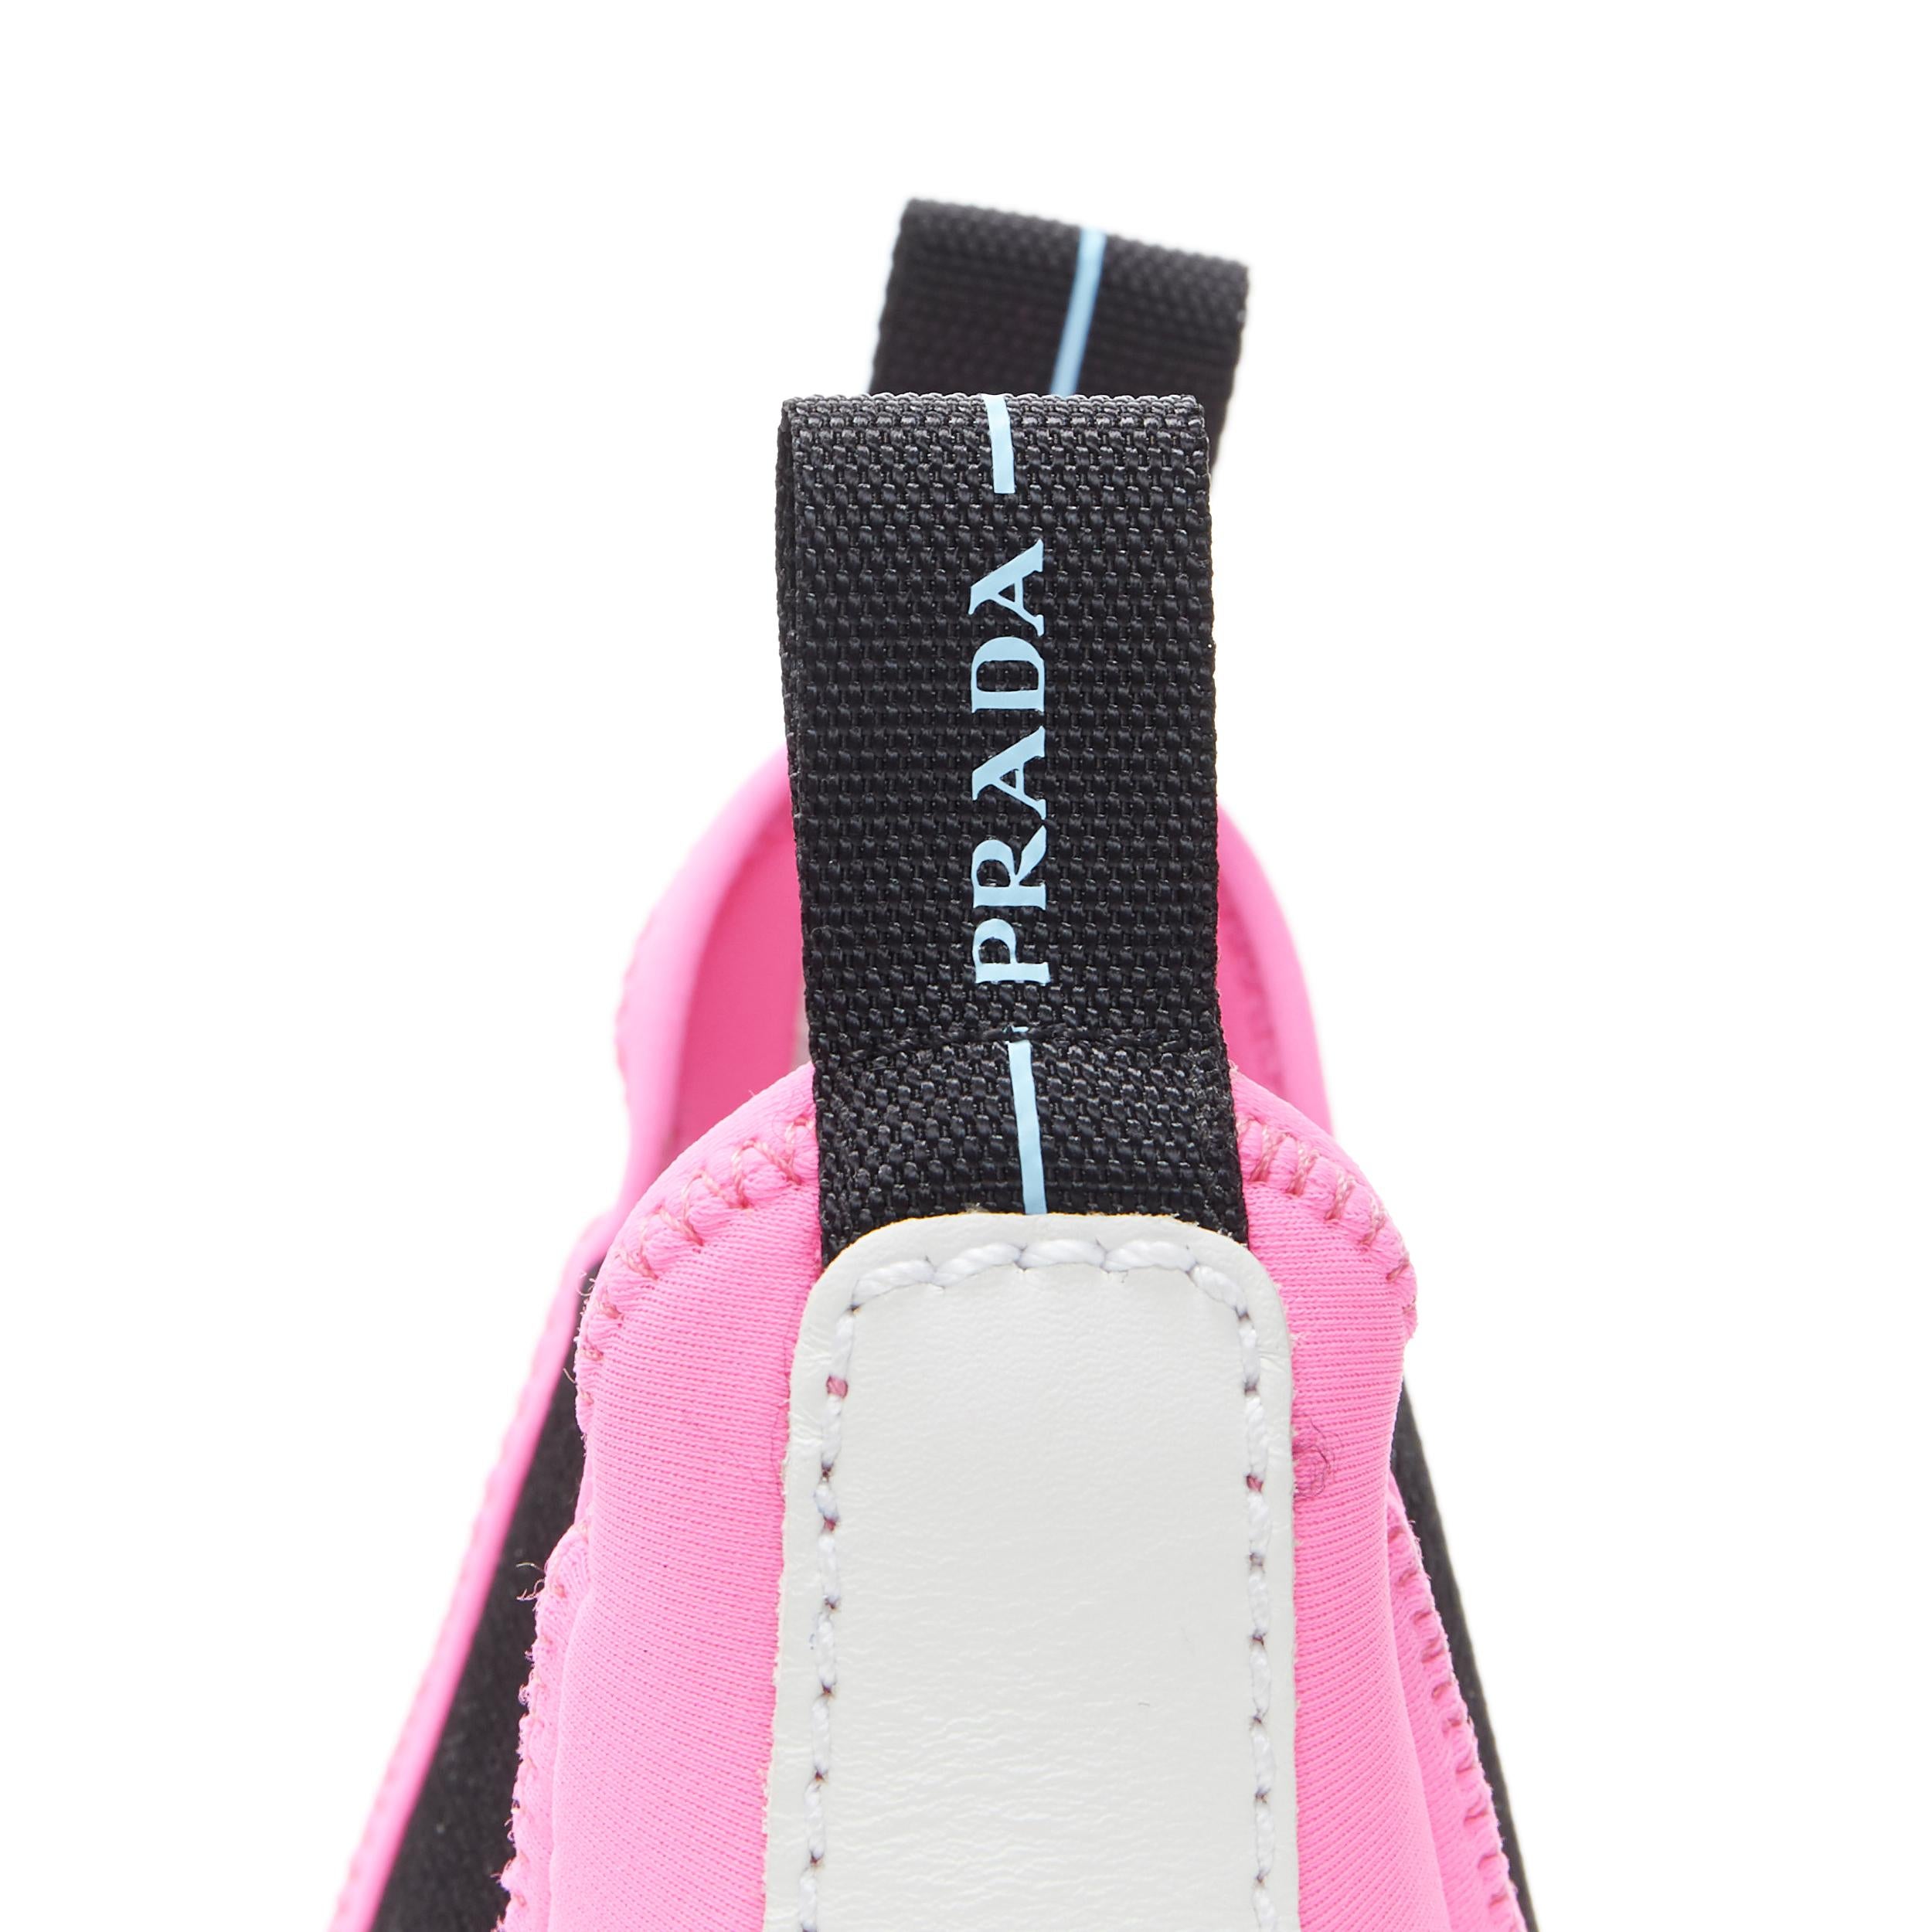 Women's new PRADA 2018 Runway neon pink neoprene white leather ankle chelsea boot EU38.5